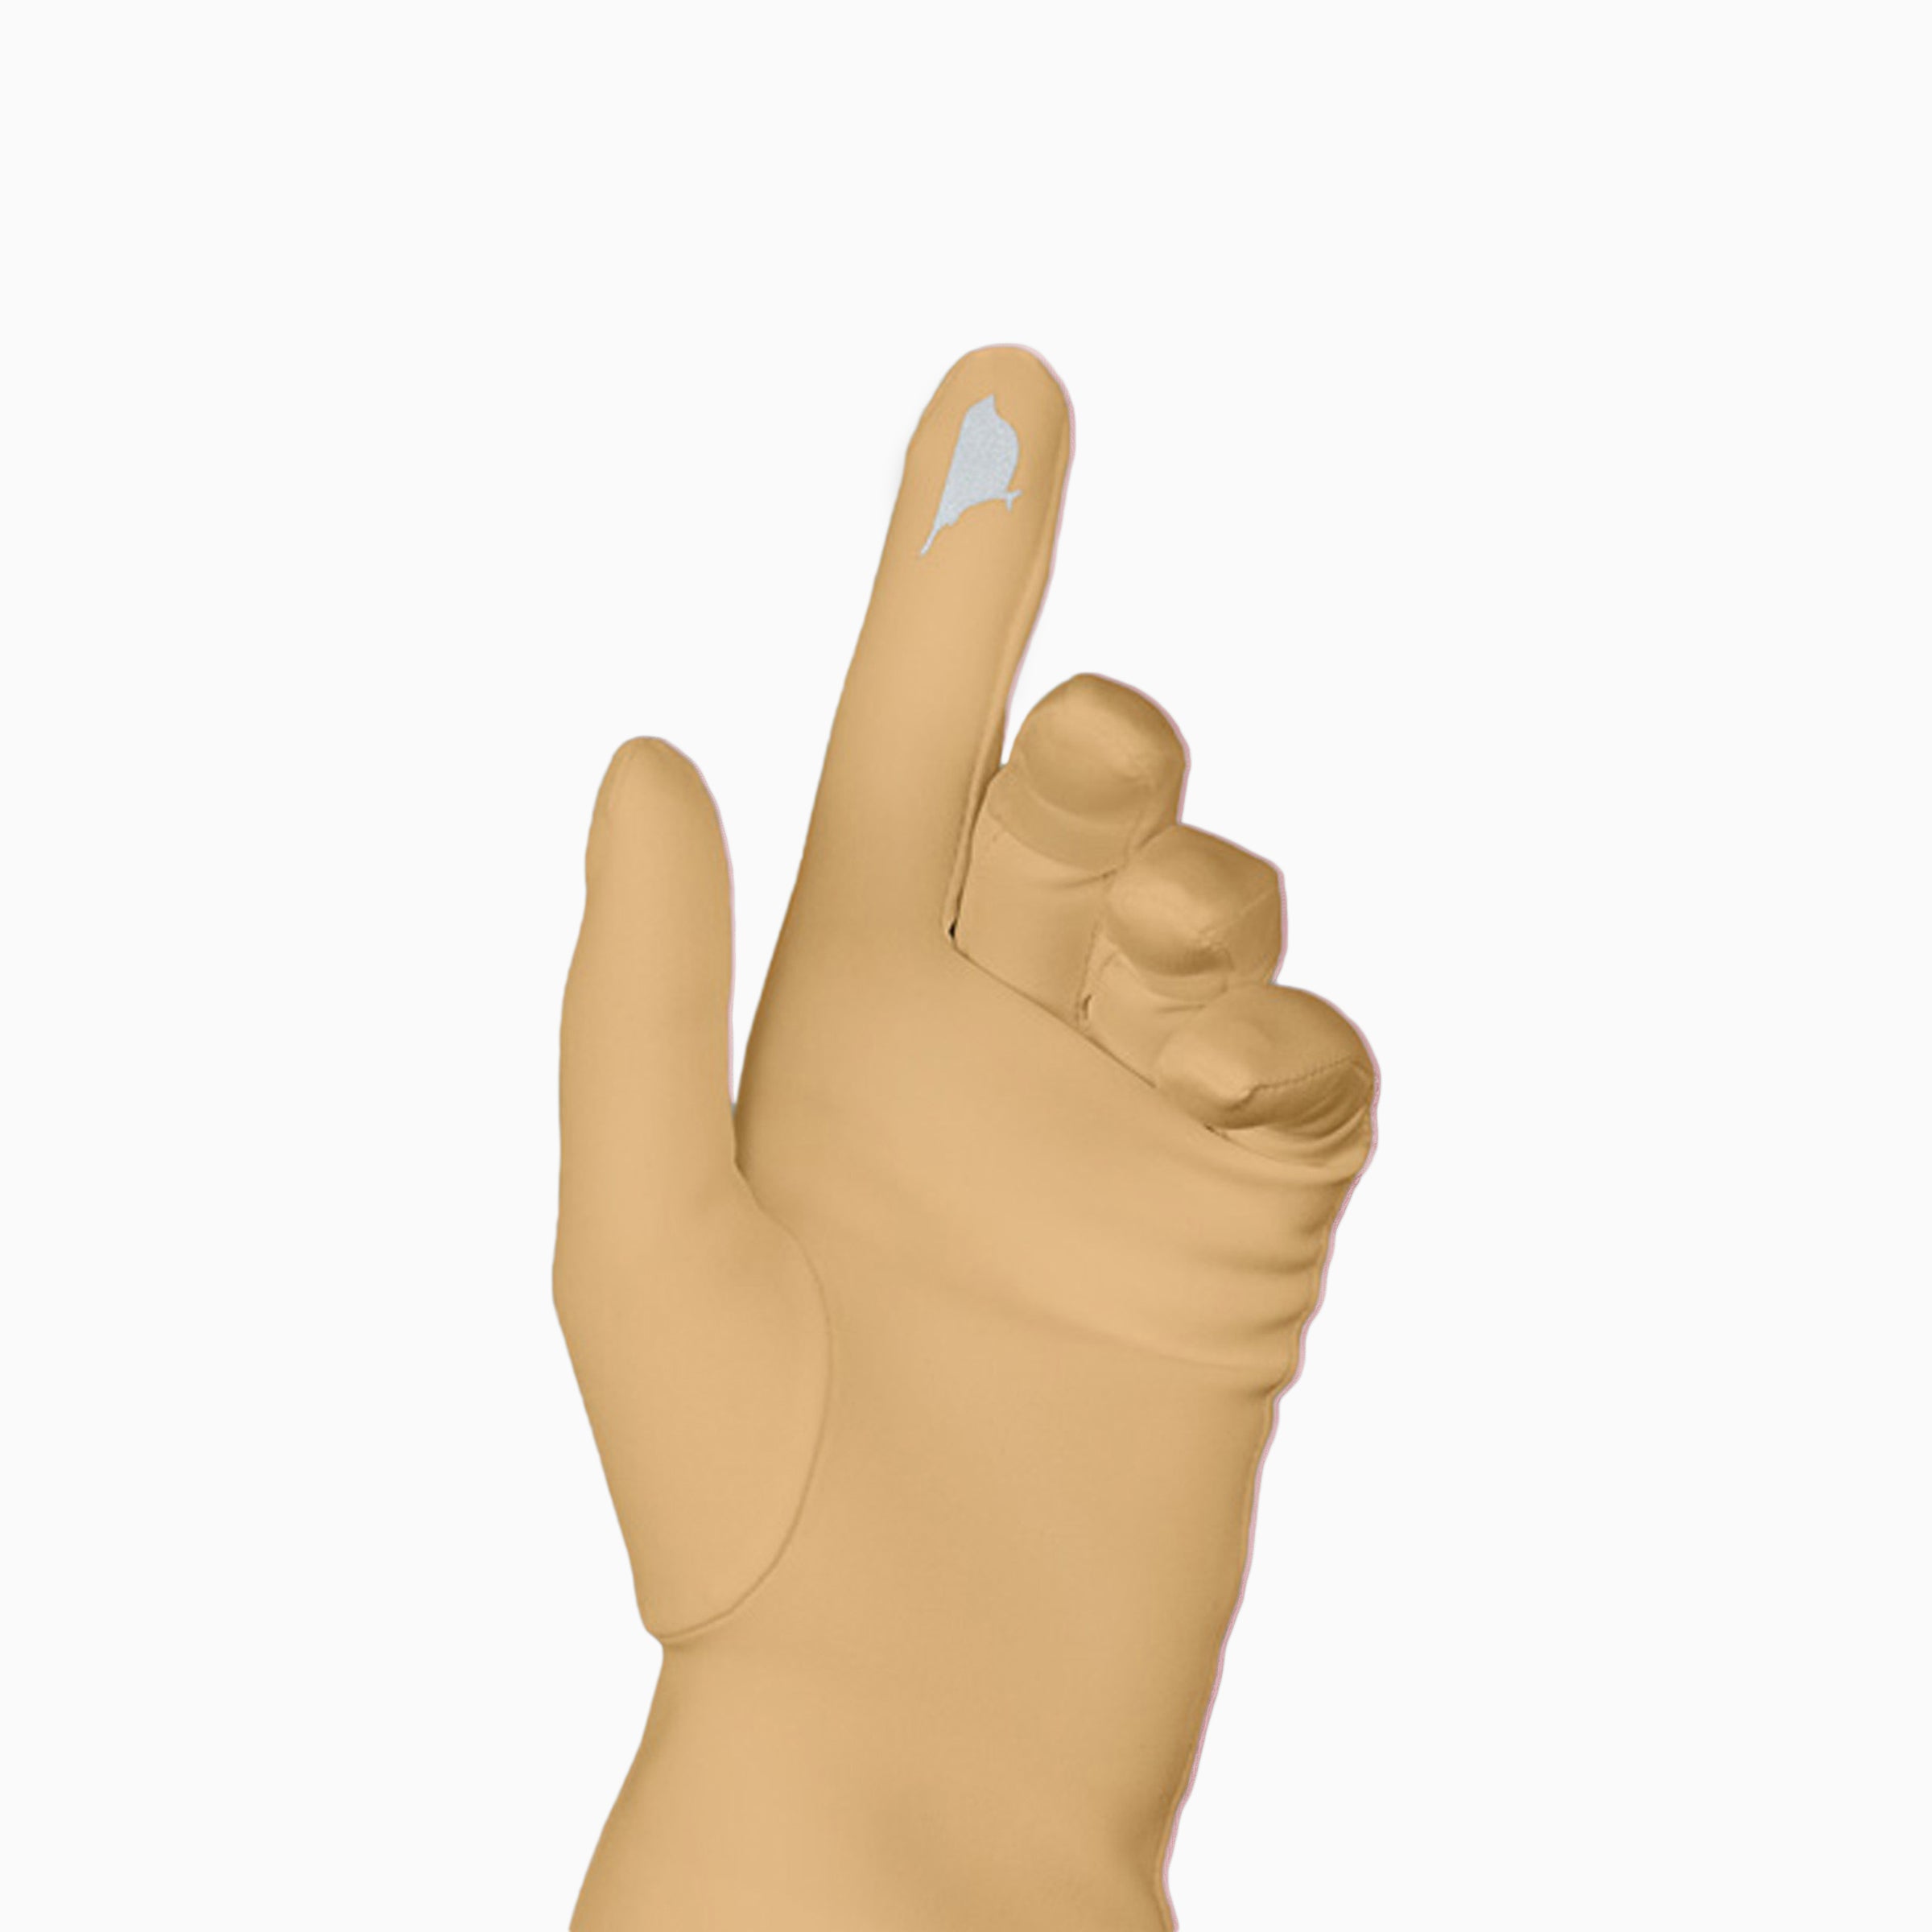 Beige women's glove against white background showing technology friendly index finger.